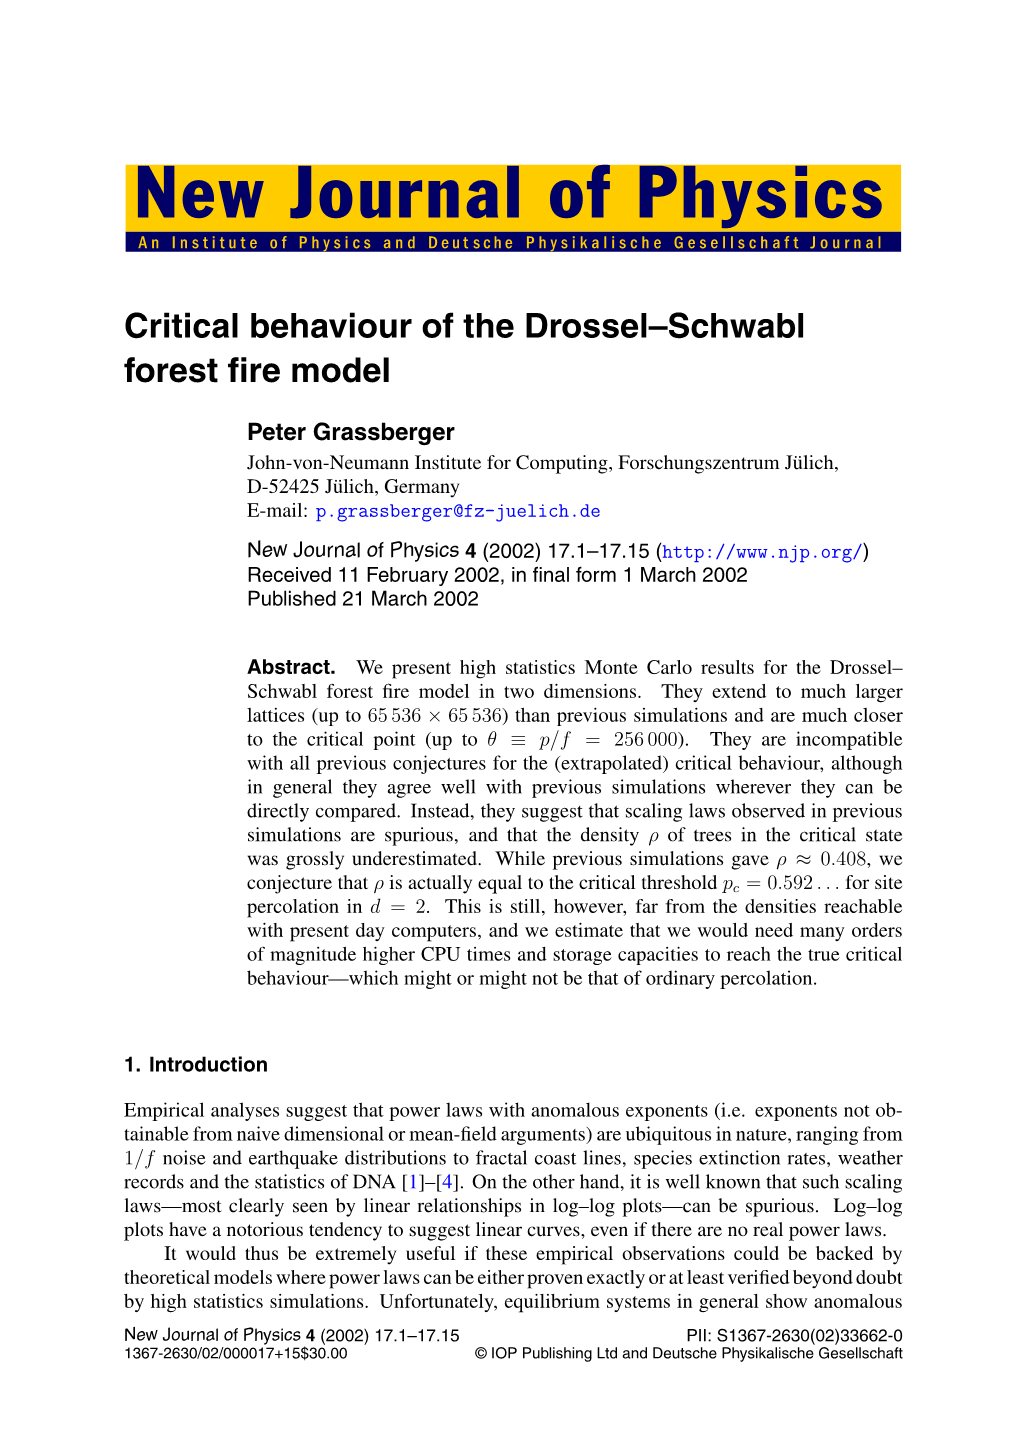 Critical Behaviour of the Drossel–Schwabl Forest Fire Model